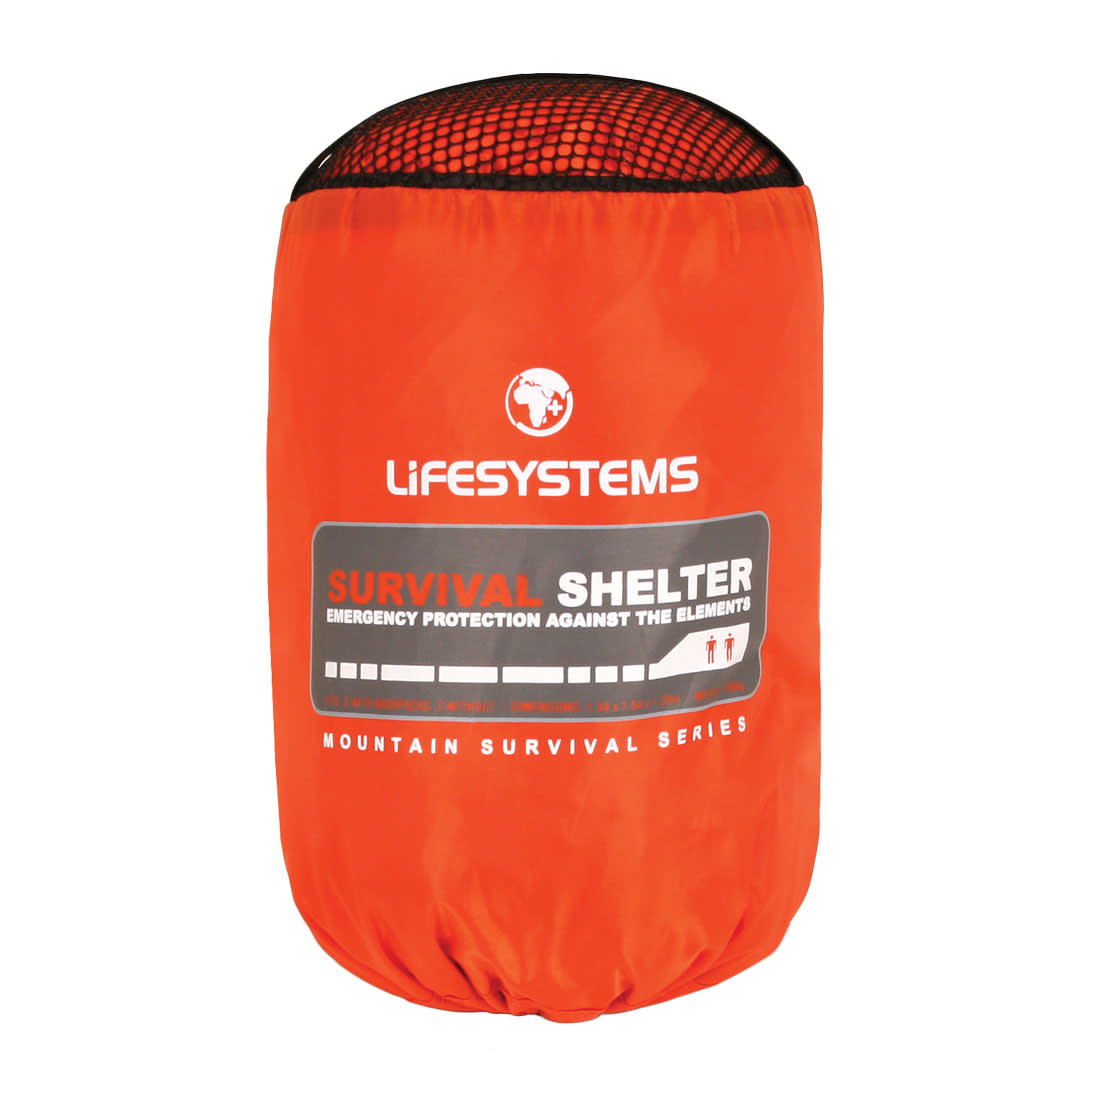 Lifesystems Survival Shelter 2 orange